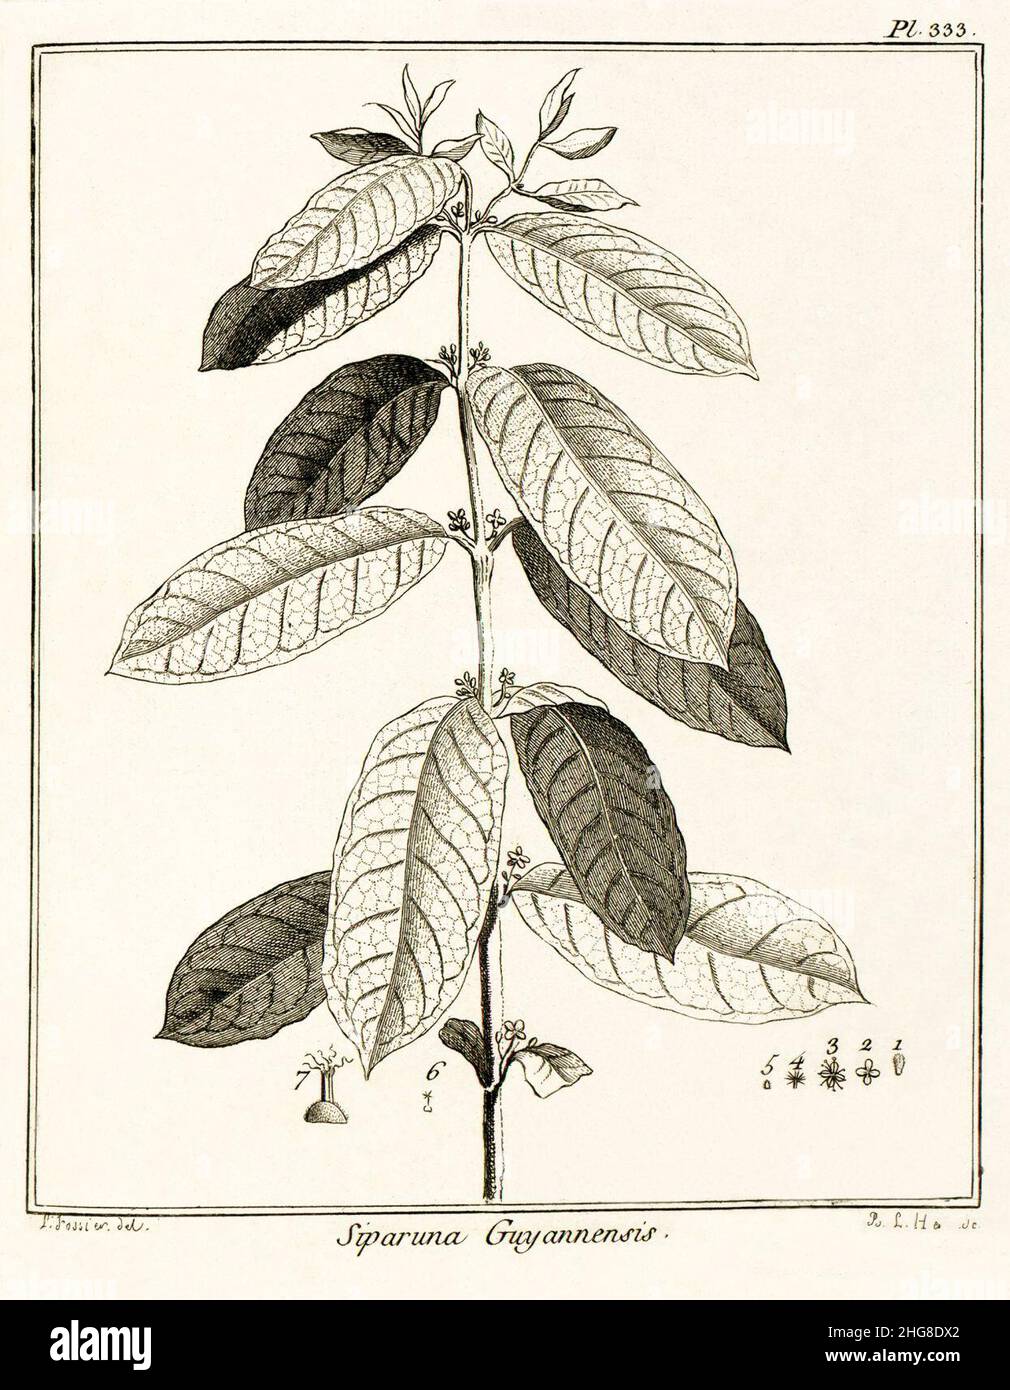 Siparuna guyannensis Aublet 1775 pl 333. Stock Photo